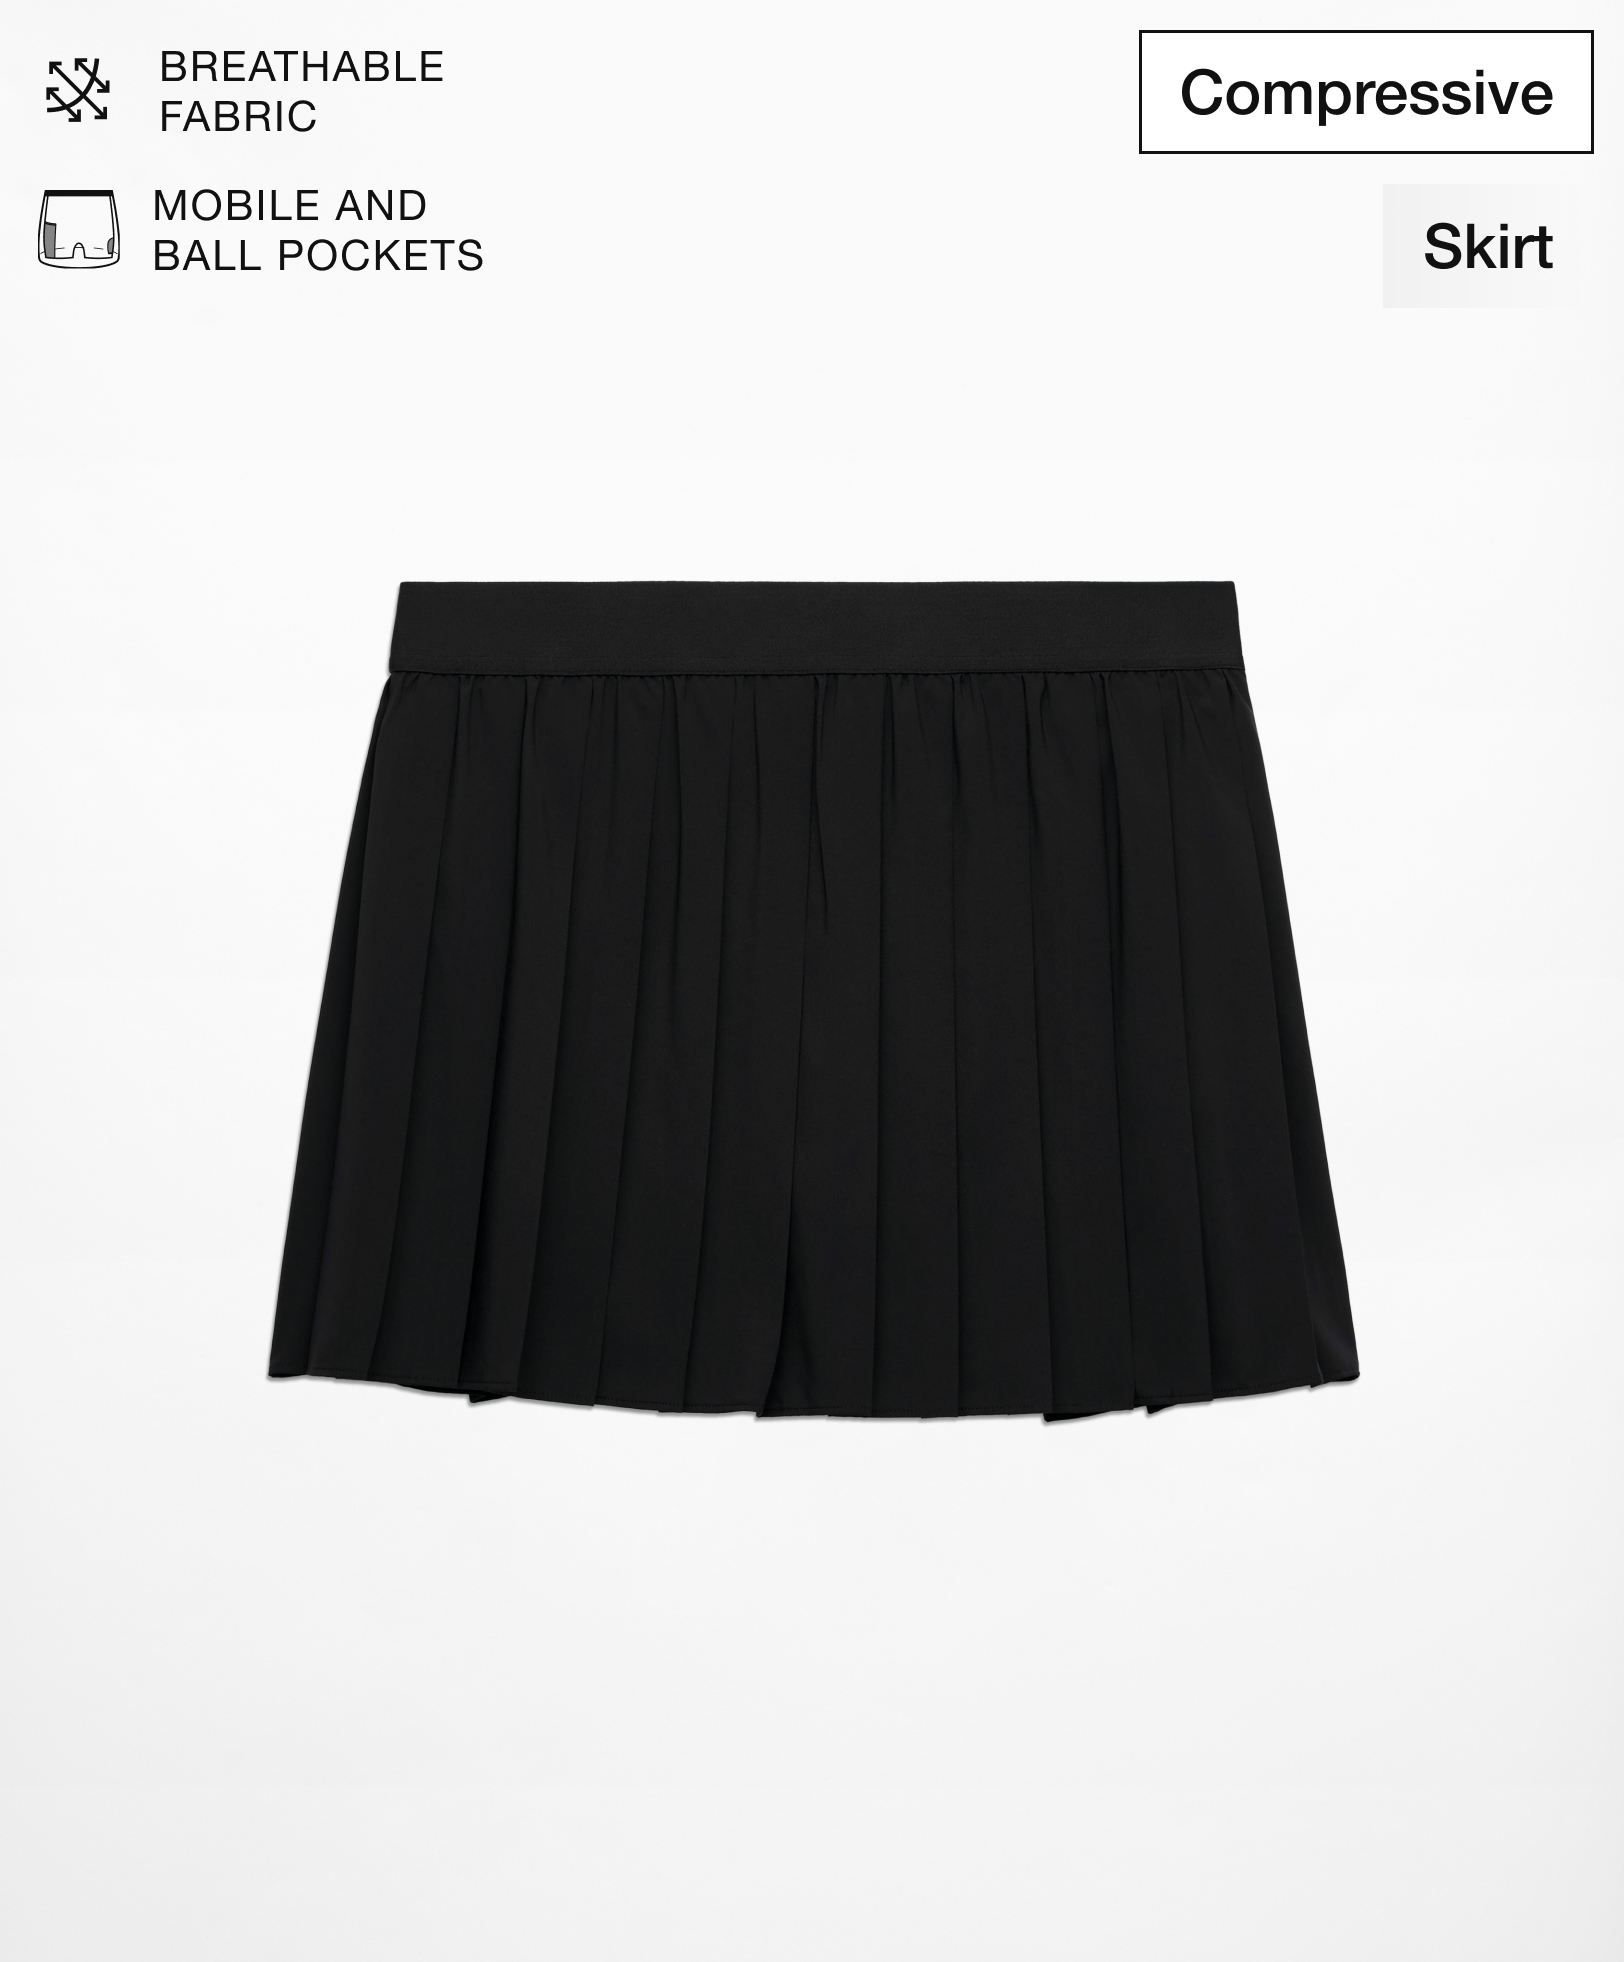 Pleated compressive skirt